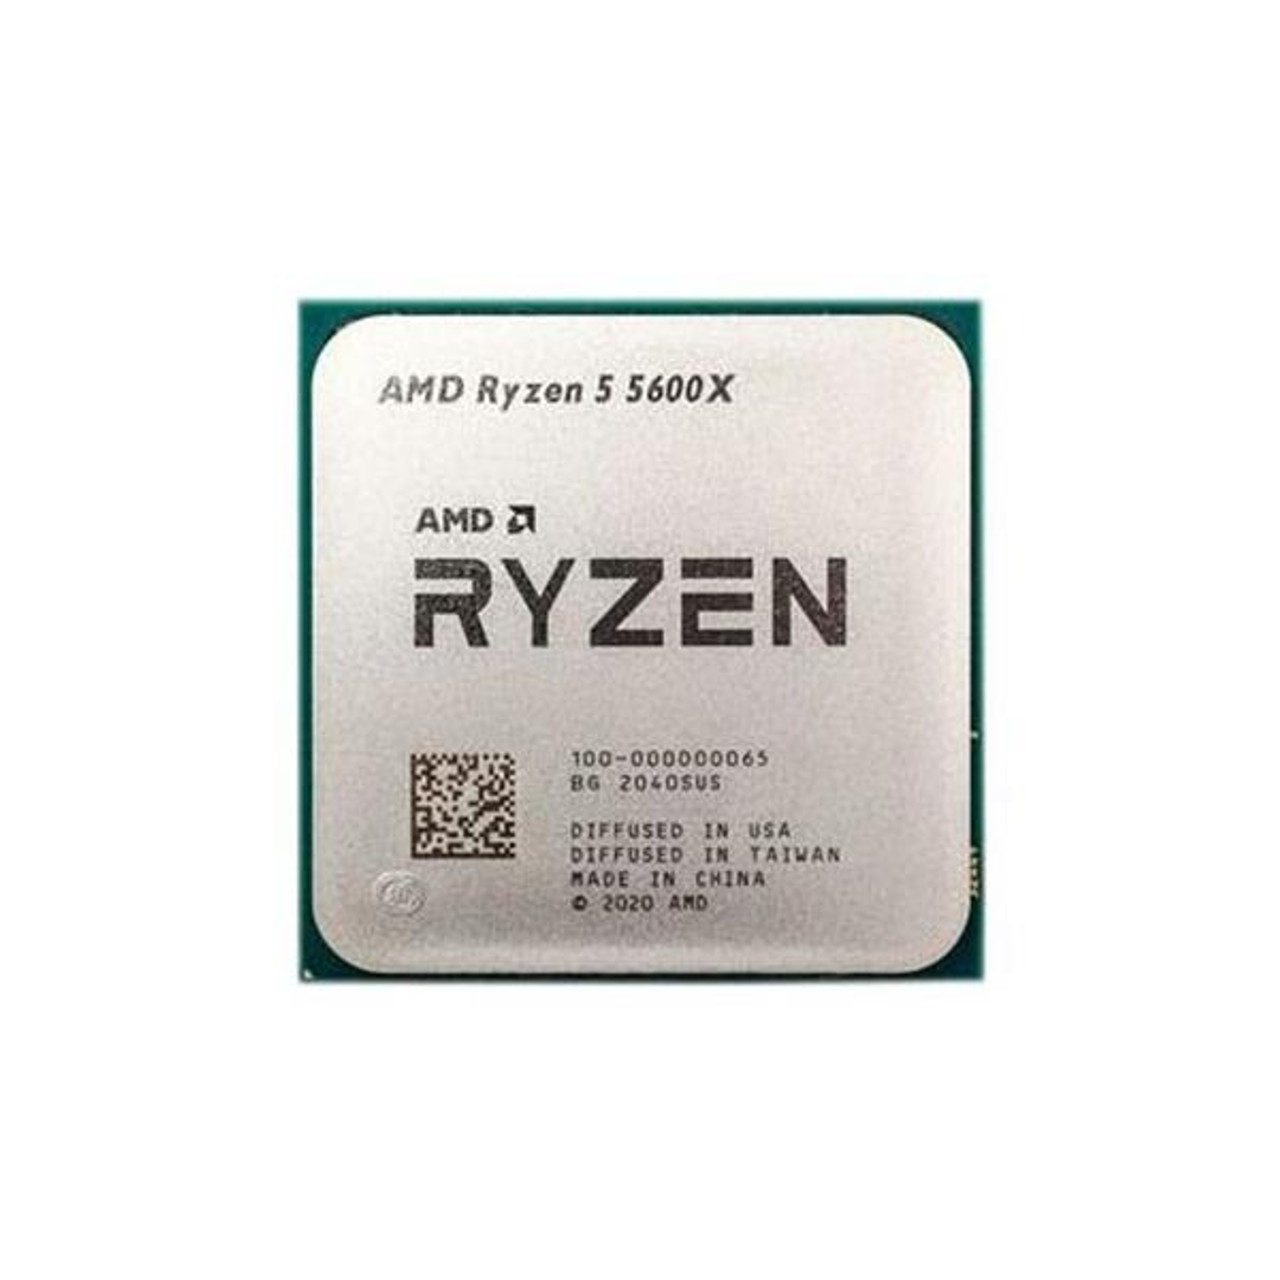 AMD Ryzen 5 5600X 6-Core 3.70GHz 32MB L3 Cache Socket AM4 Processor